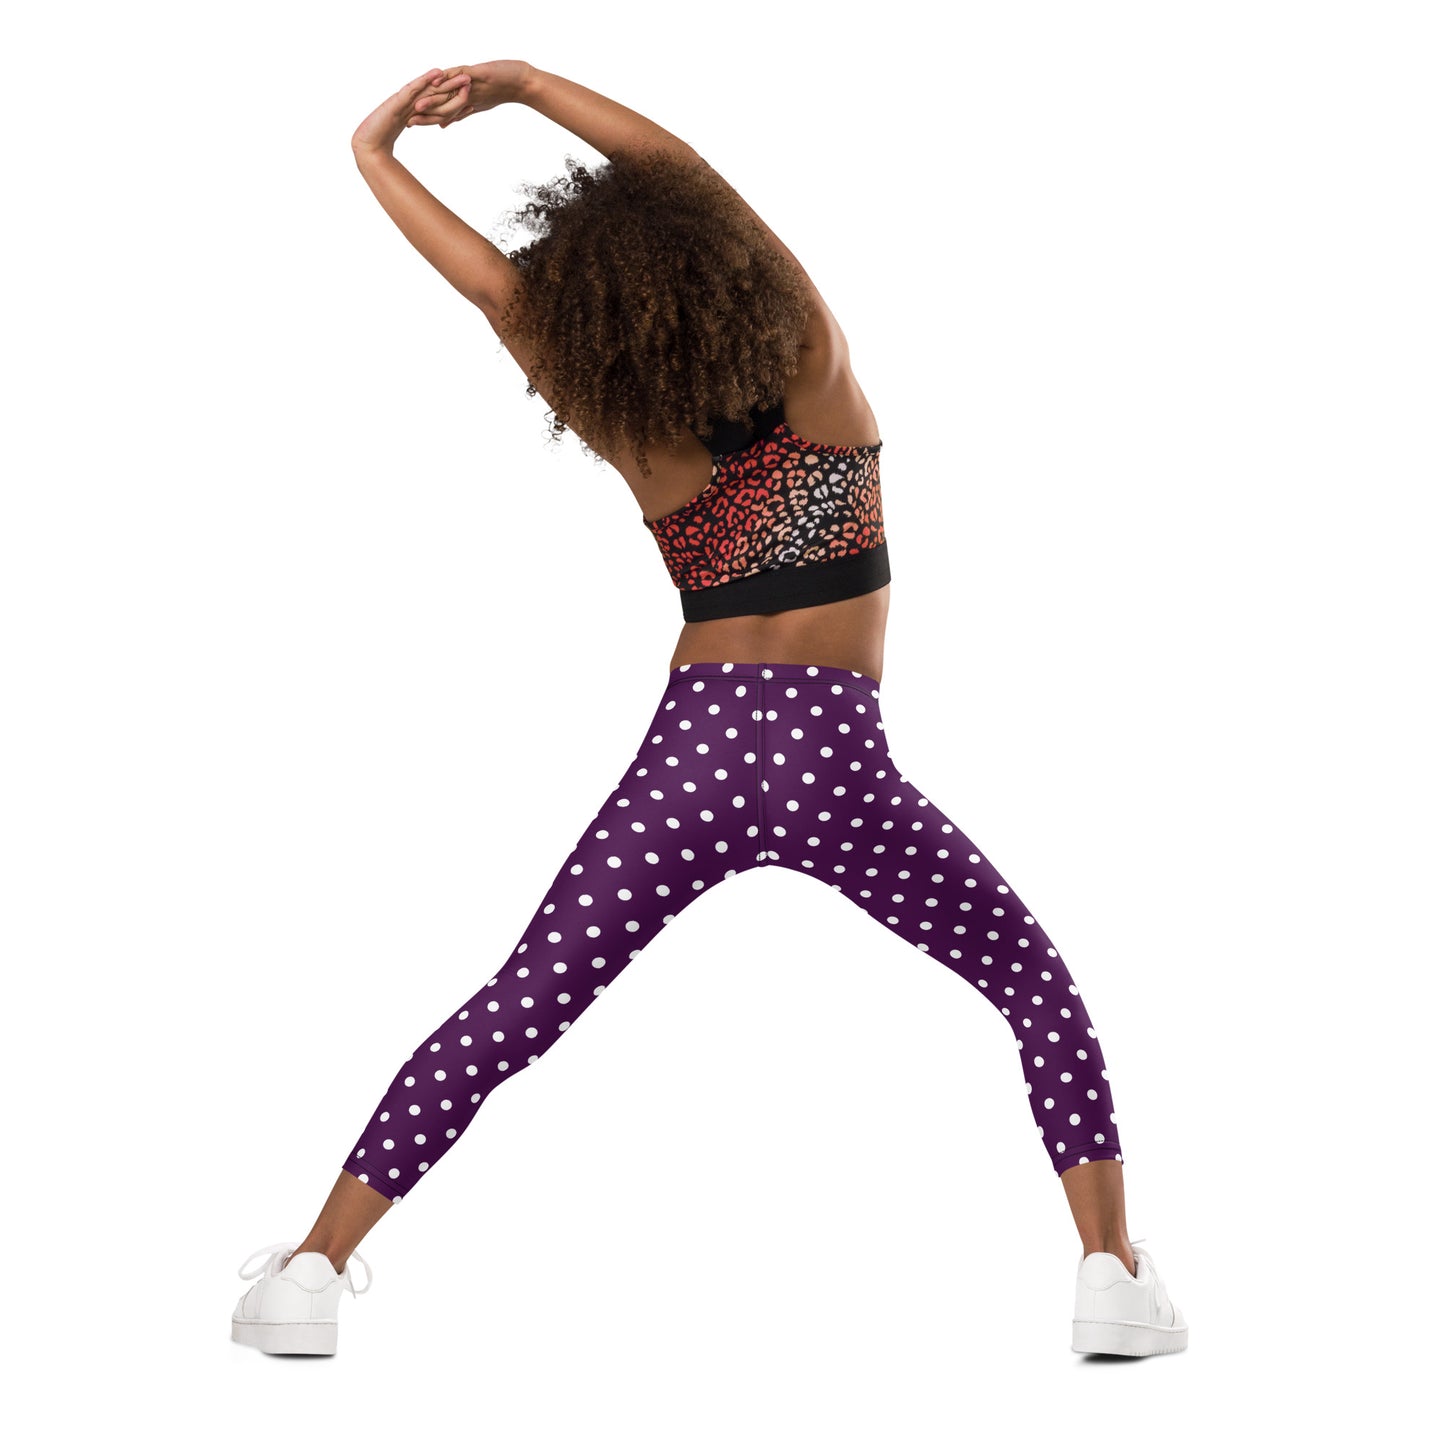 Purple Polka Dots Kids Girls Leggings (2T-7), Toddler Children Cute Printed Yoga Pants Graphic Fun Tights Gift Starcove Fashion